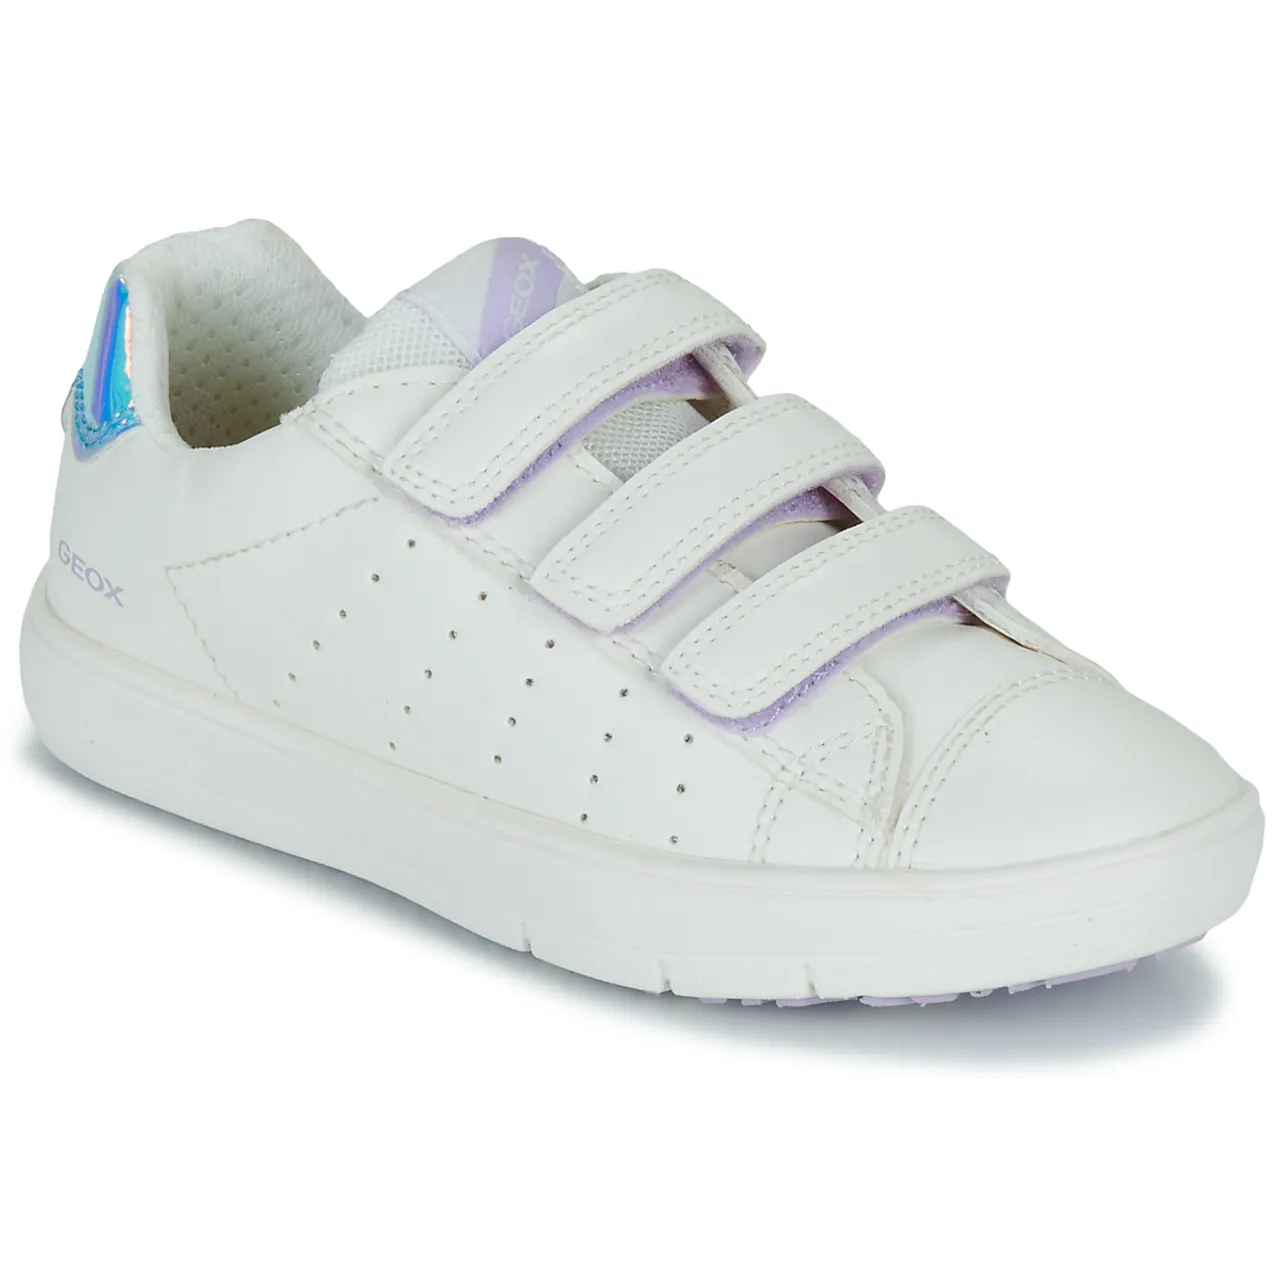 Geox  J SILENEX GIRL B  girls's Children's Shoes (Trainers) in White